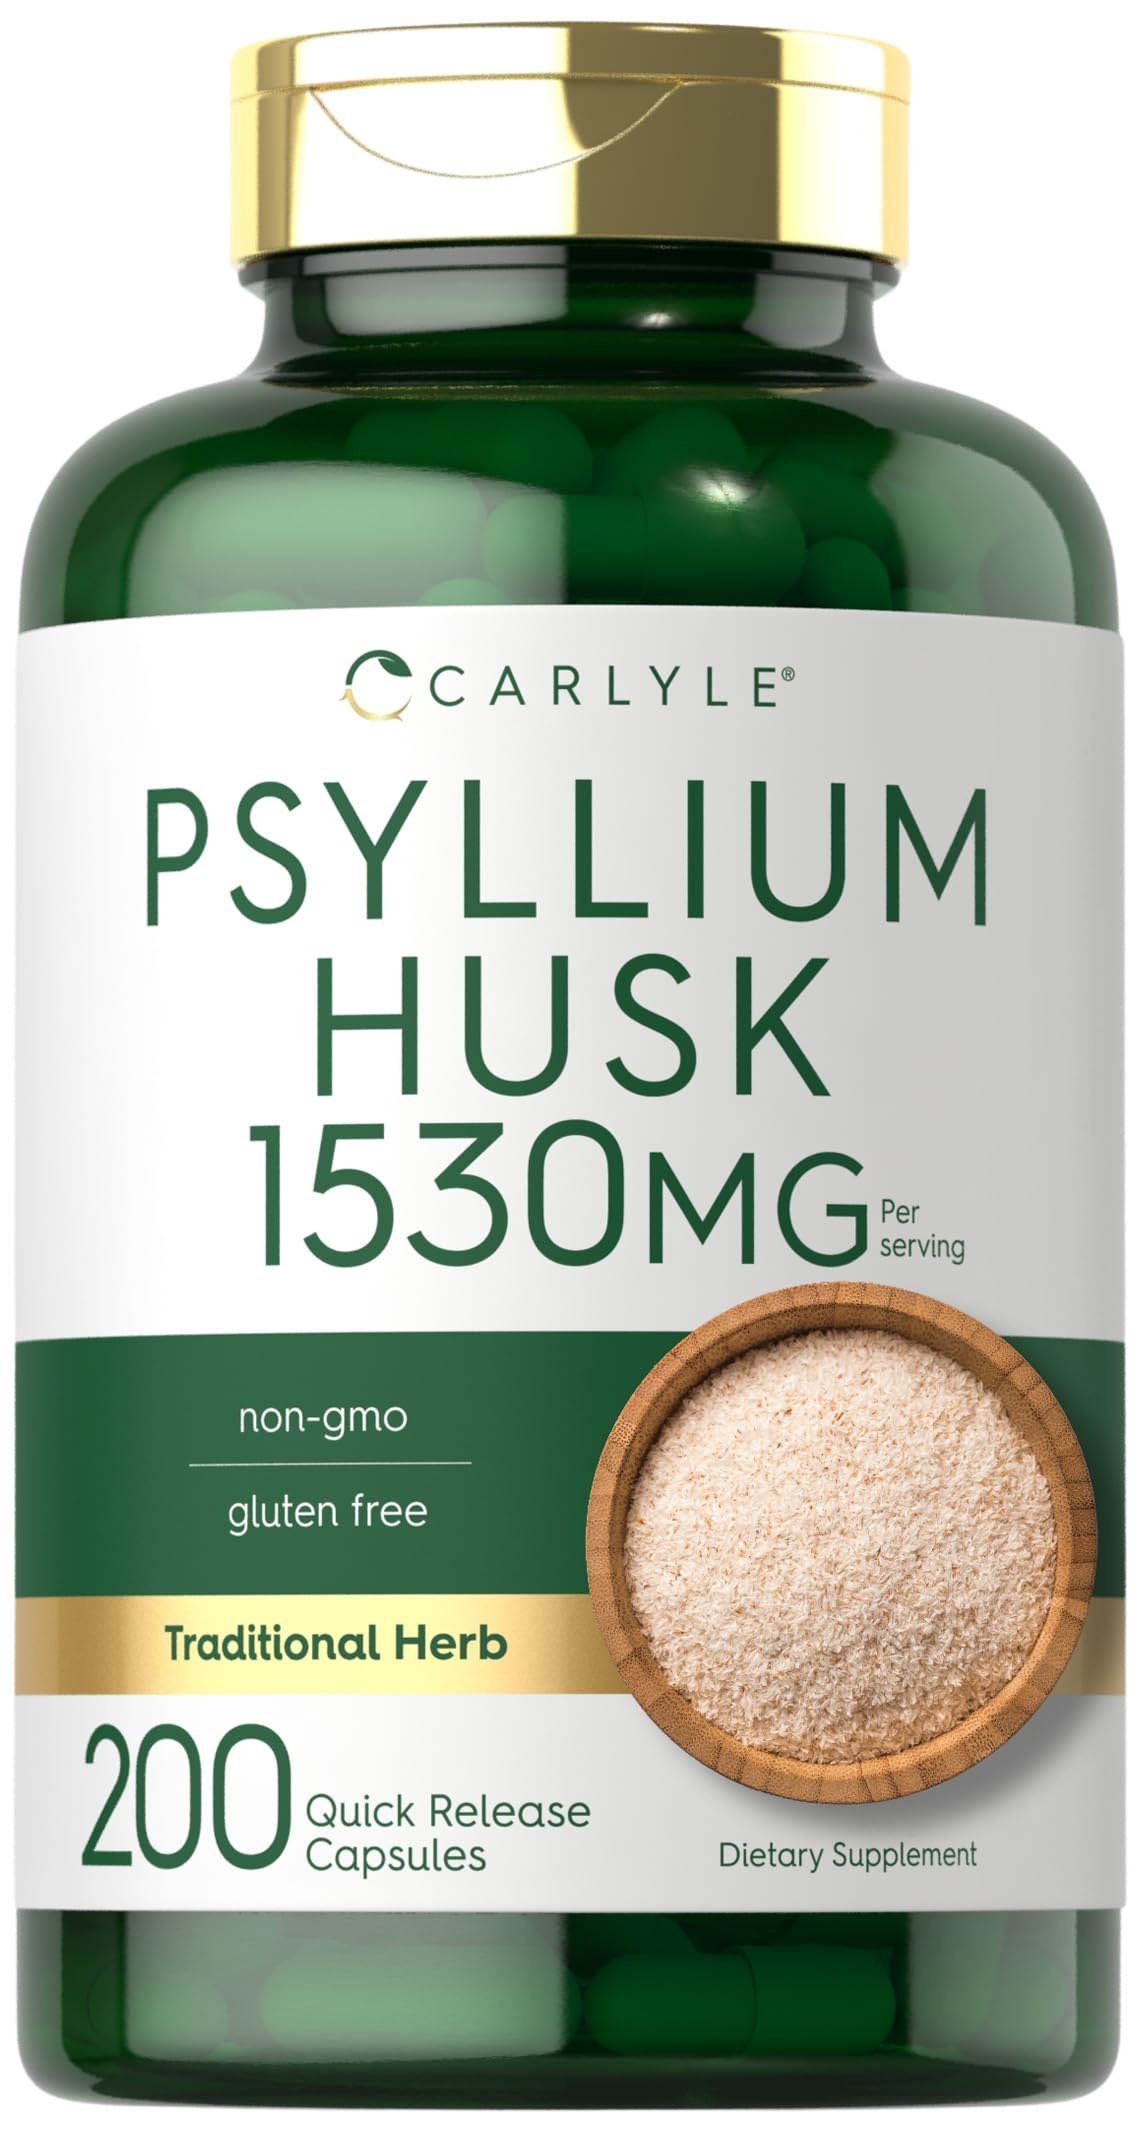 Carlyle Psyllium Husk Capsules